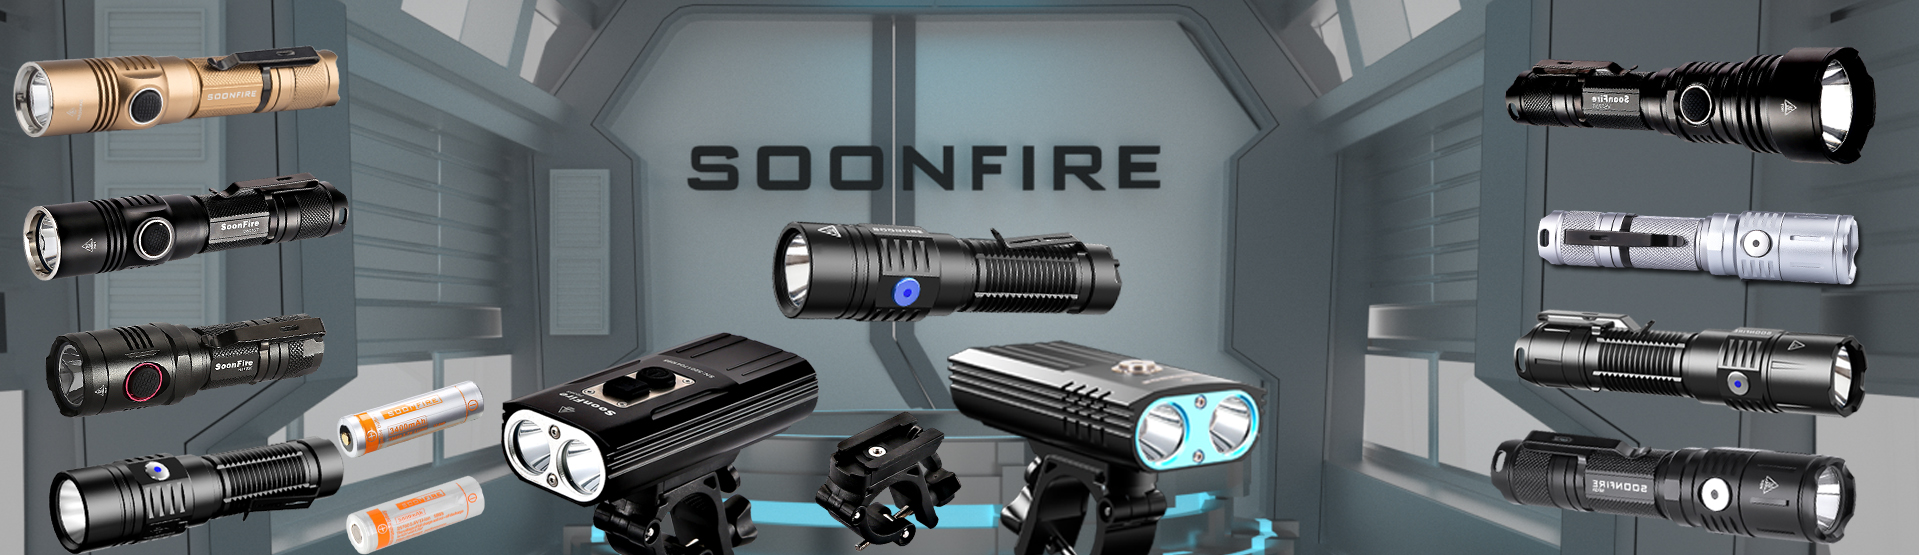 soonfire-1